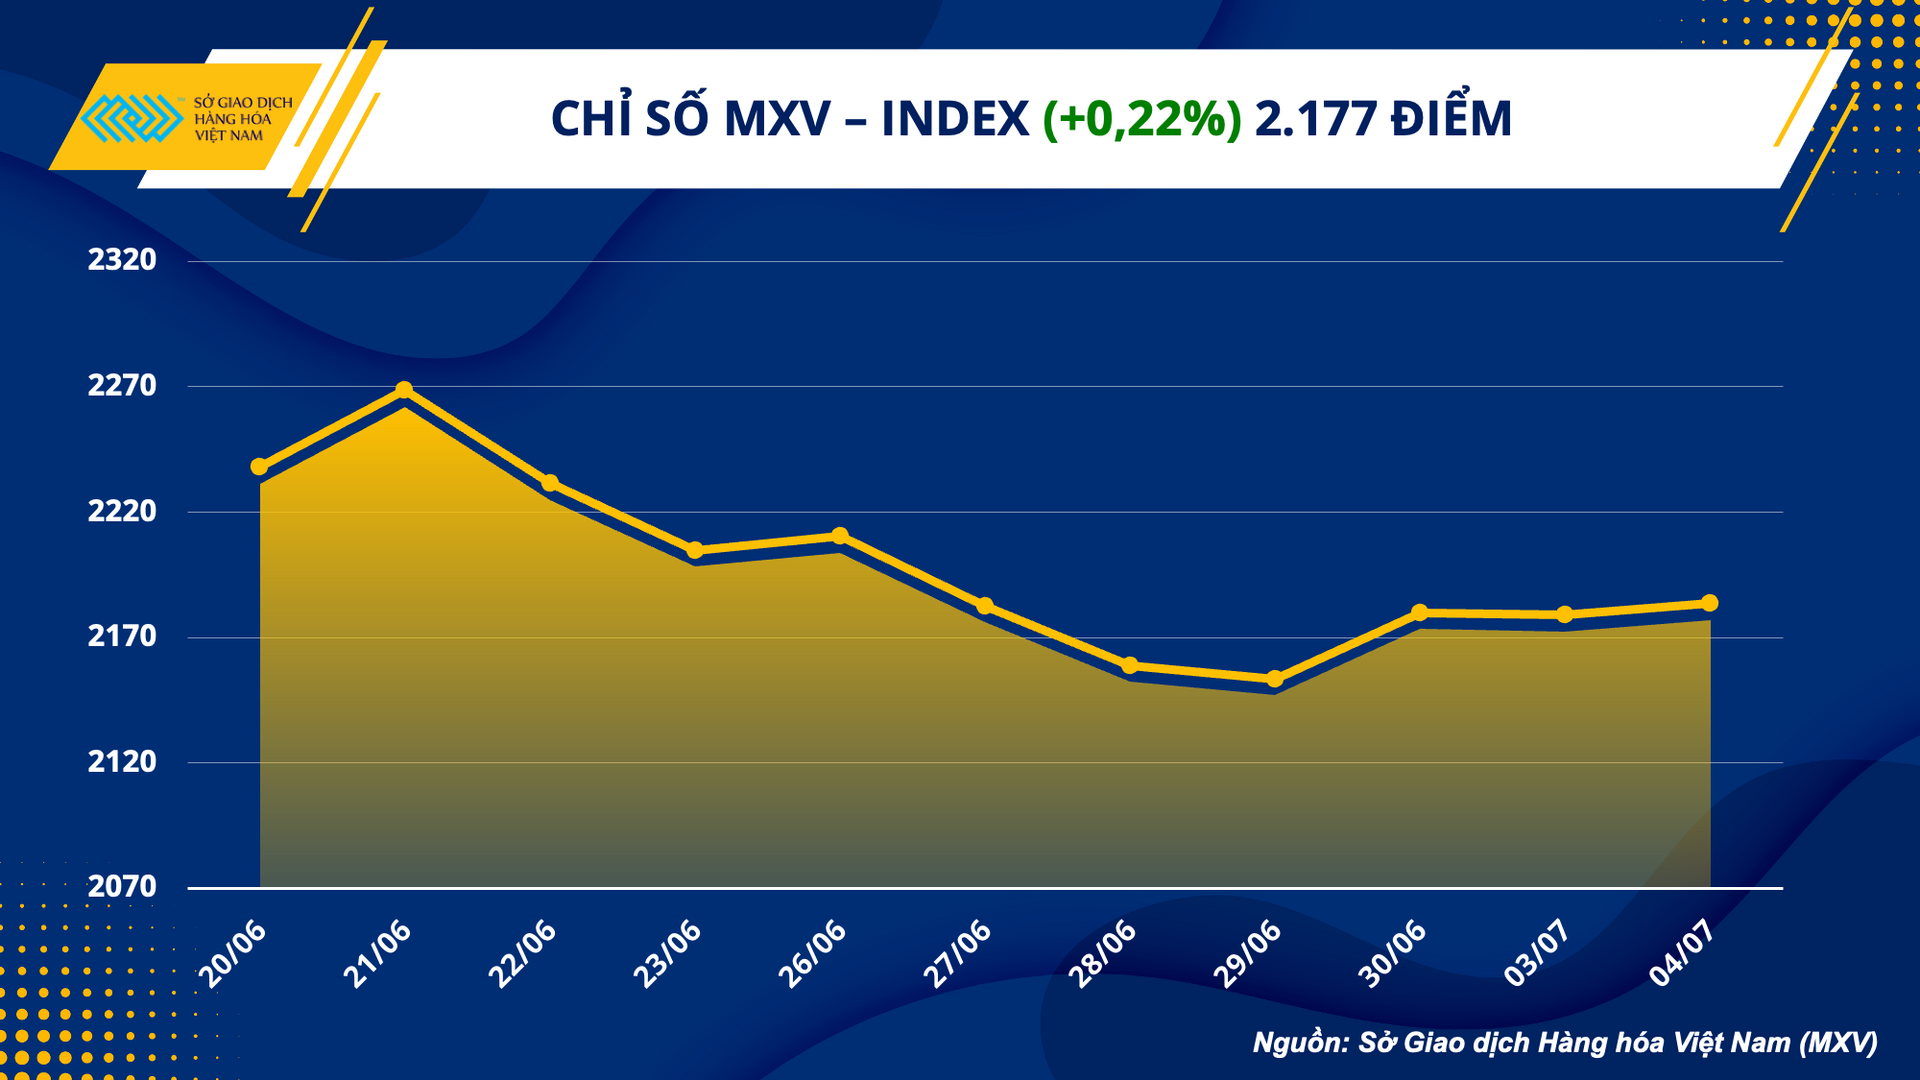 1. mxv - index (23)